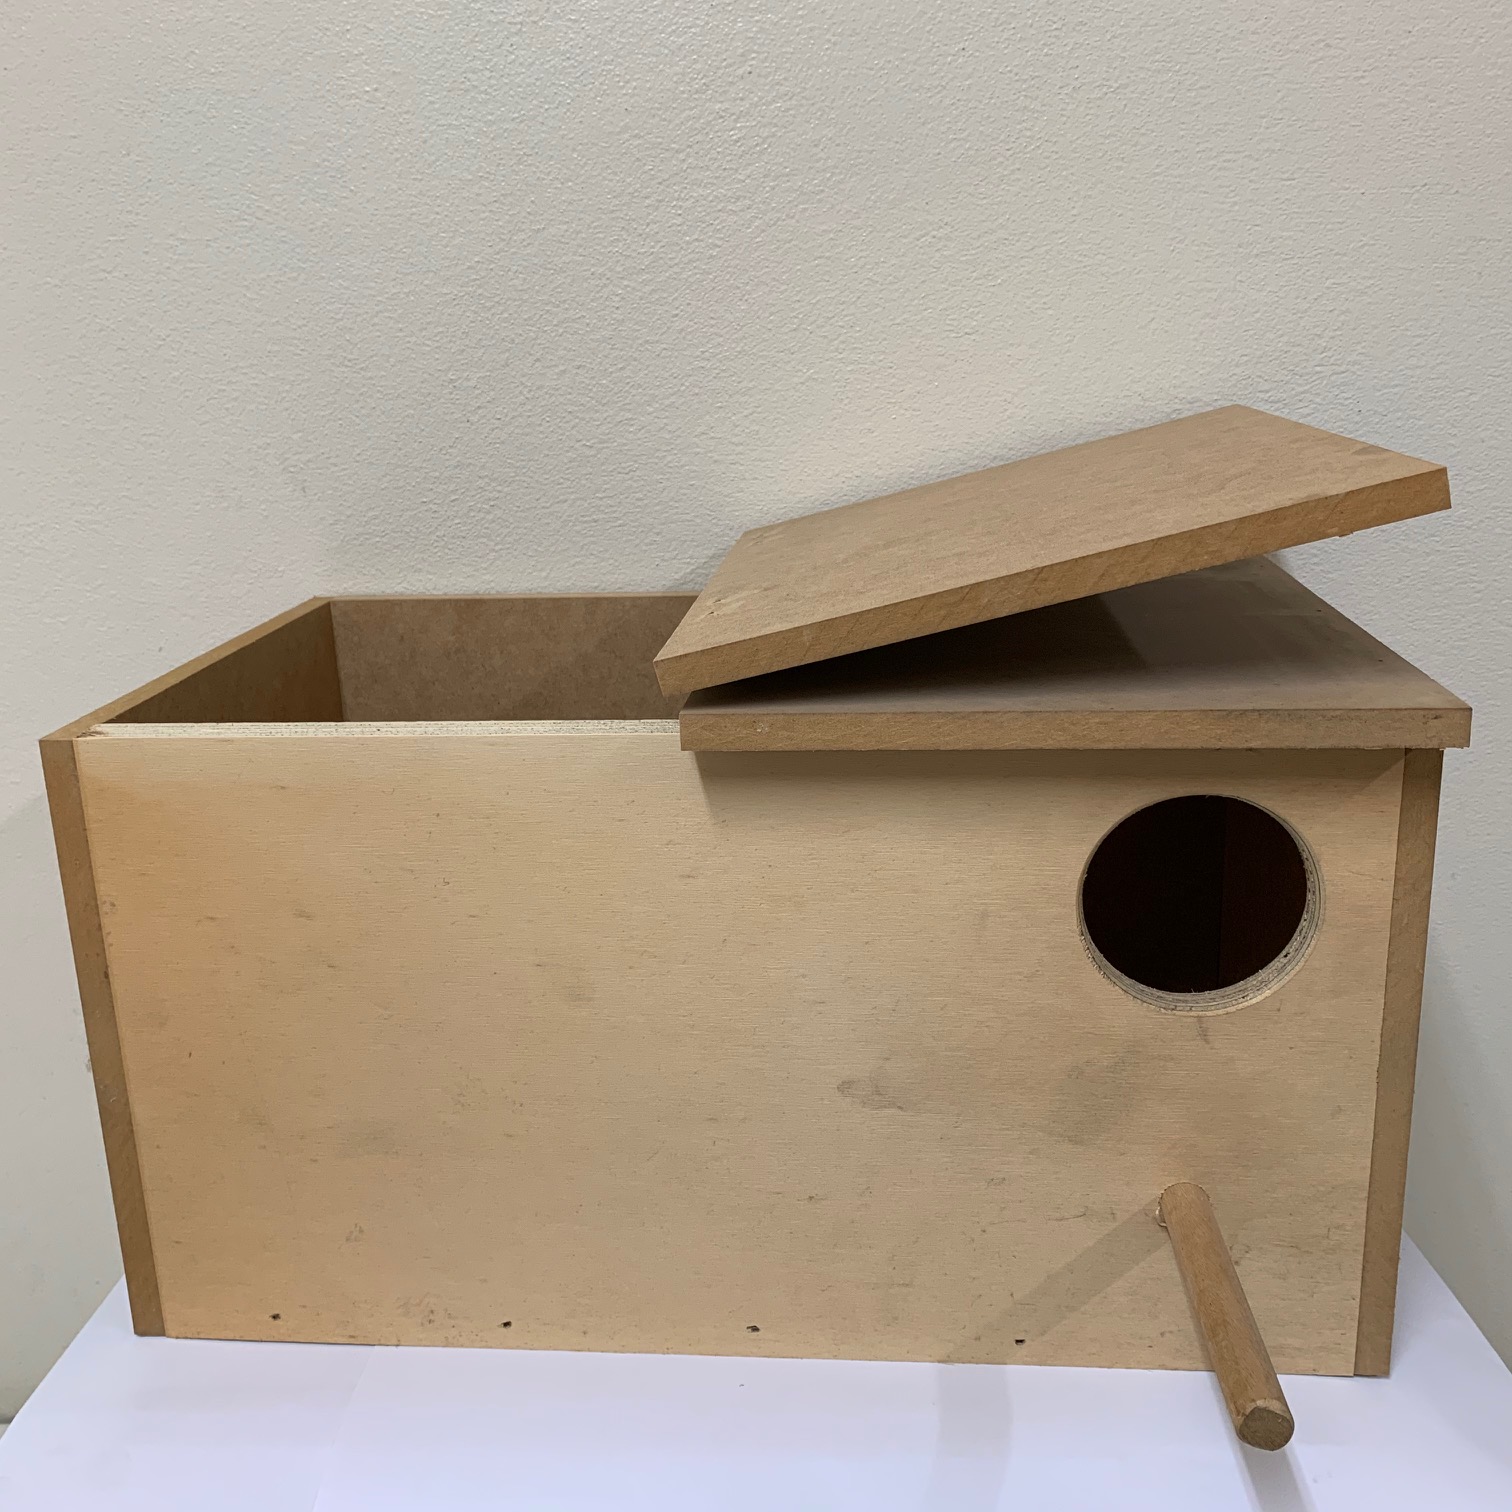 Wooden Budgie nest box w perch